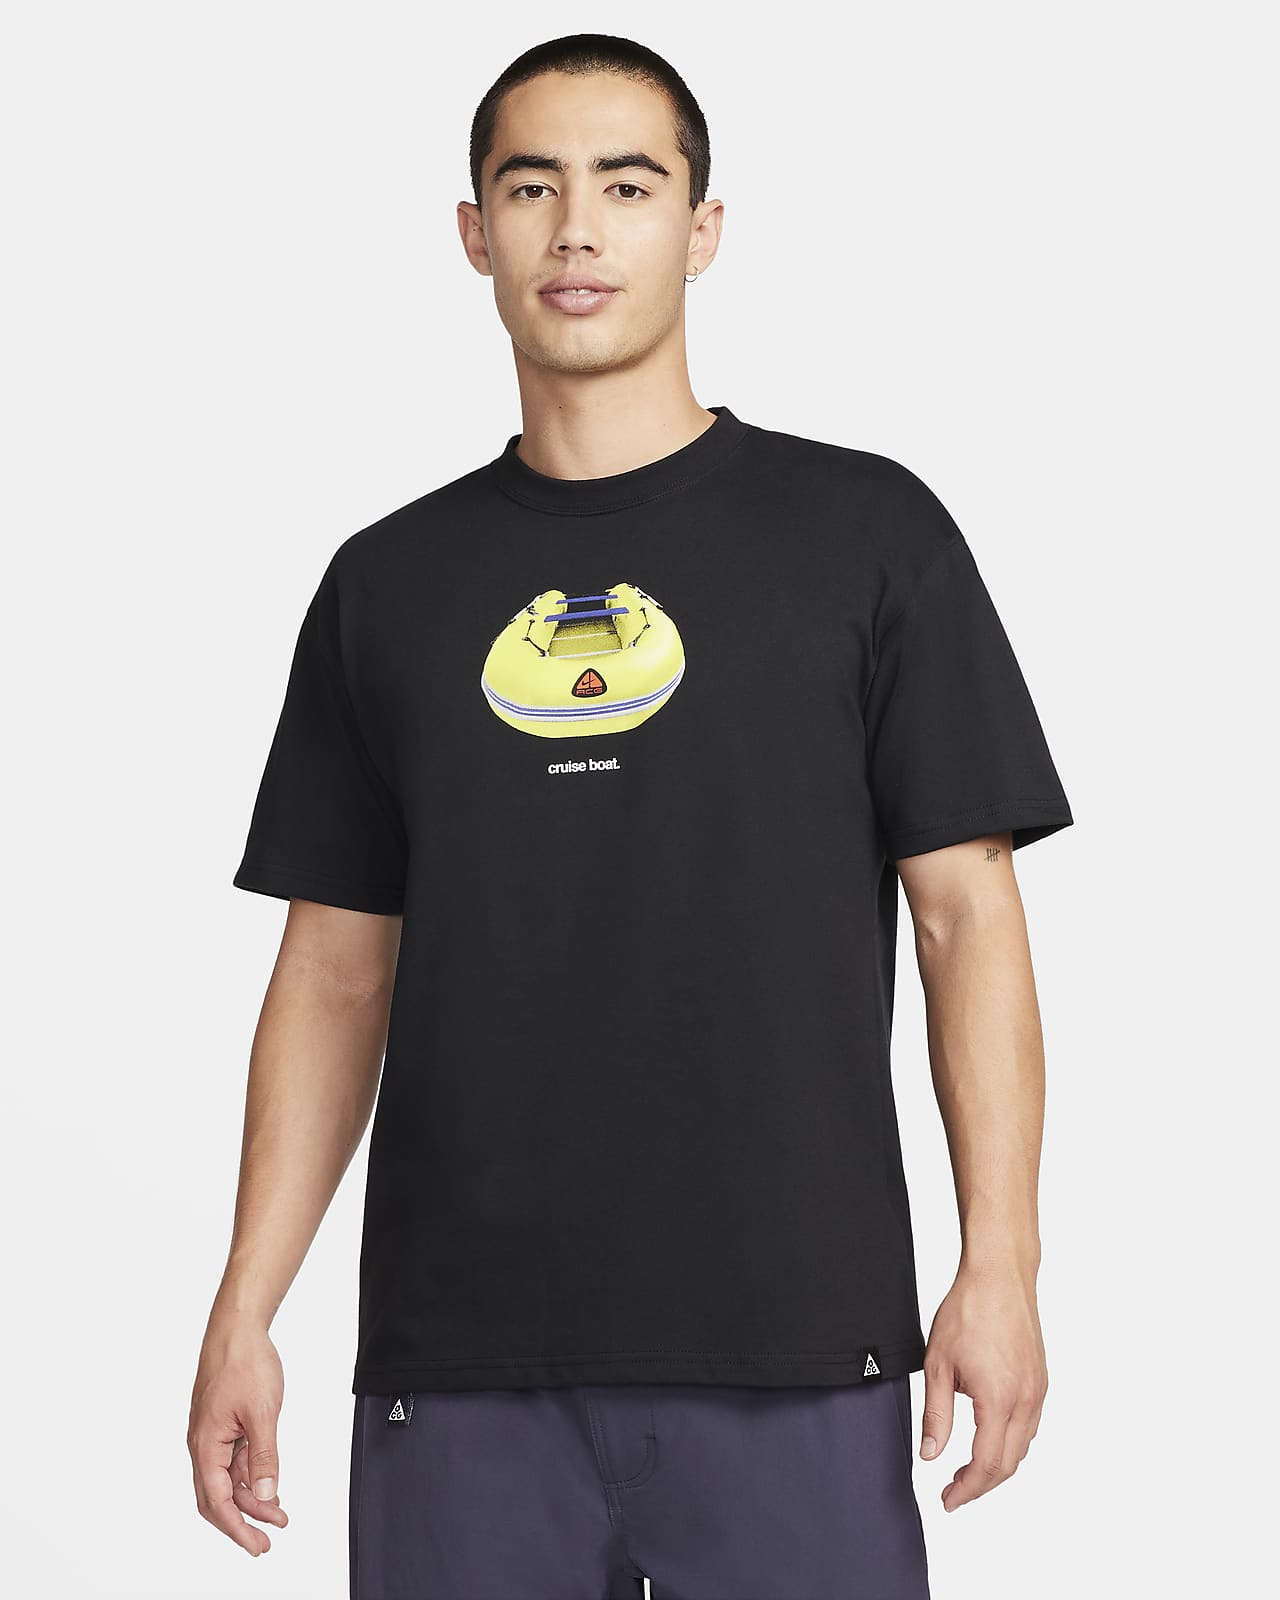 Nike ACG "Cruise Boat" Men's Dri-FIT T-Shirt